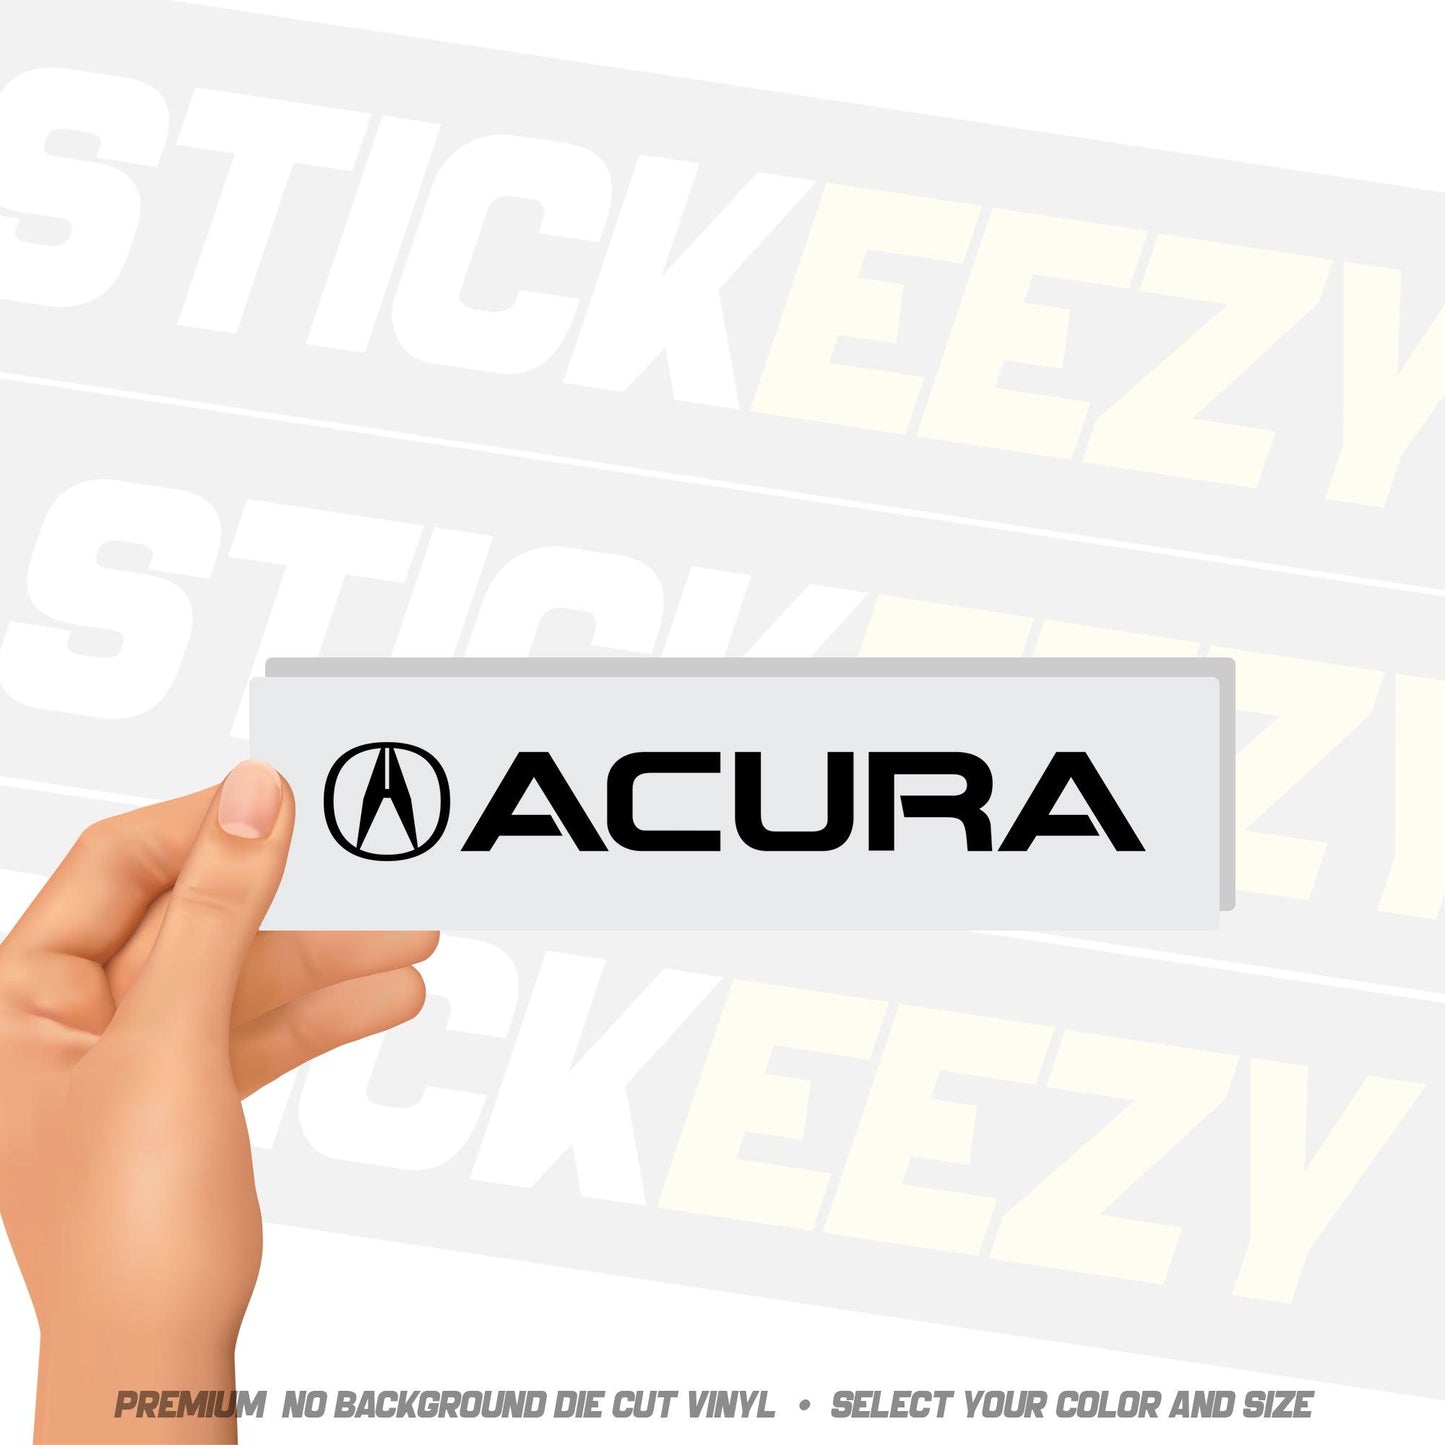 Acura Brake Caliper Decal 2 pcs - stickeezy